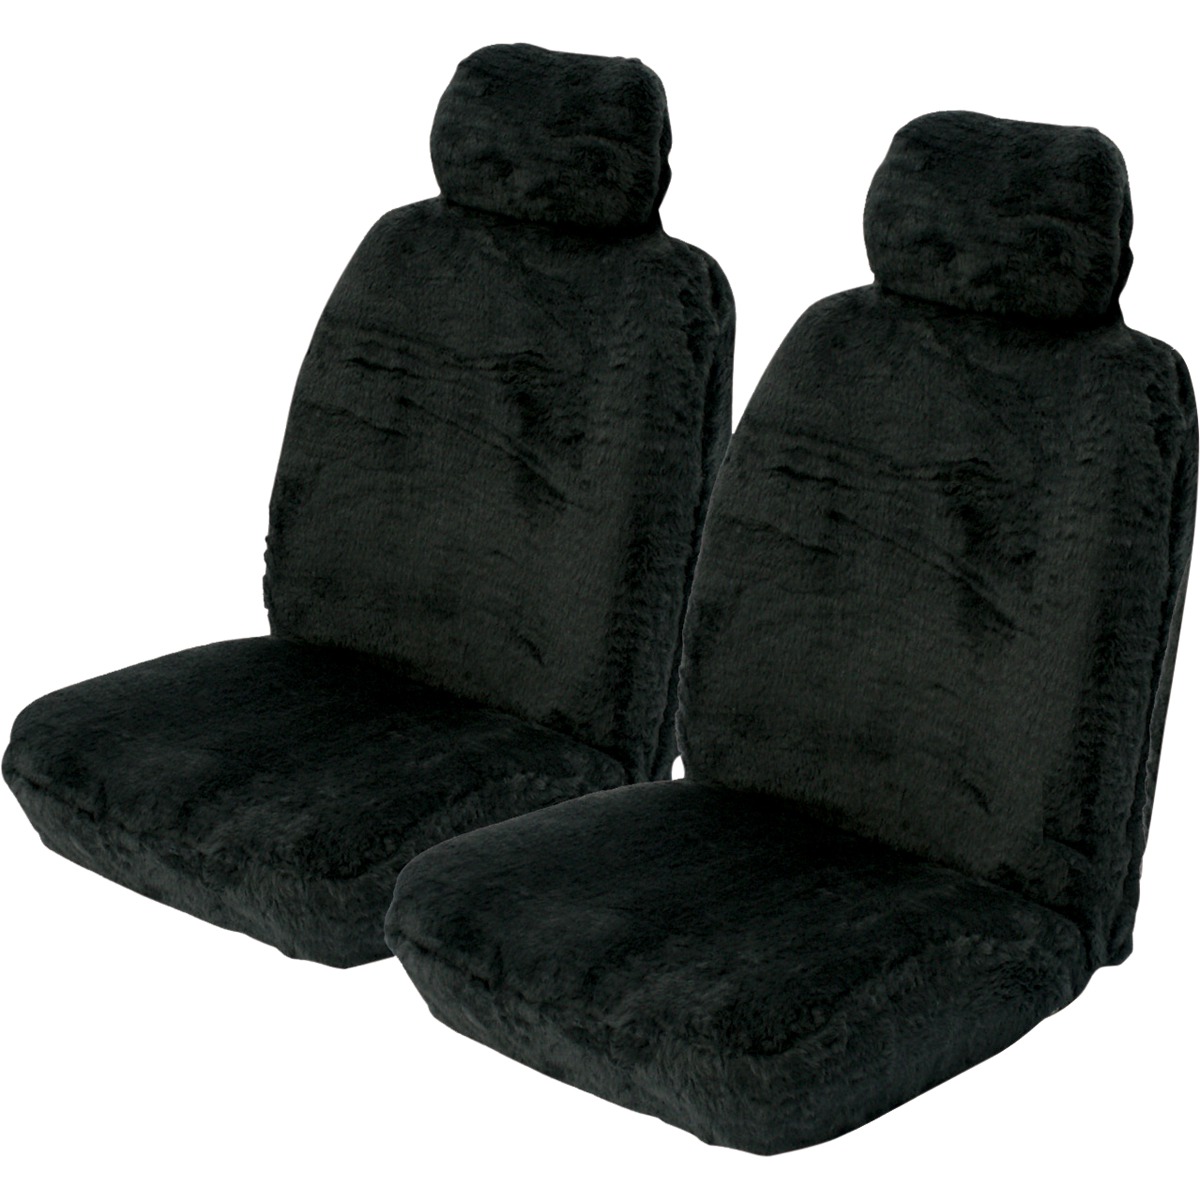 Sheepskin Car Seat Covers 2pc Set Real Australian Soft Pad Cushion Leather Hive